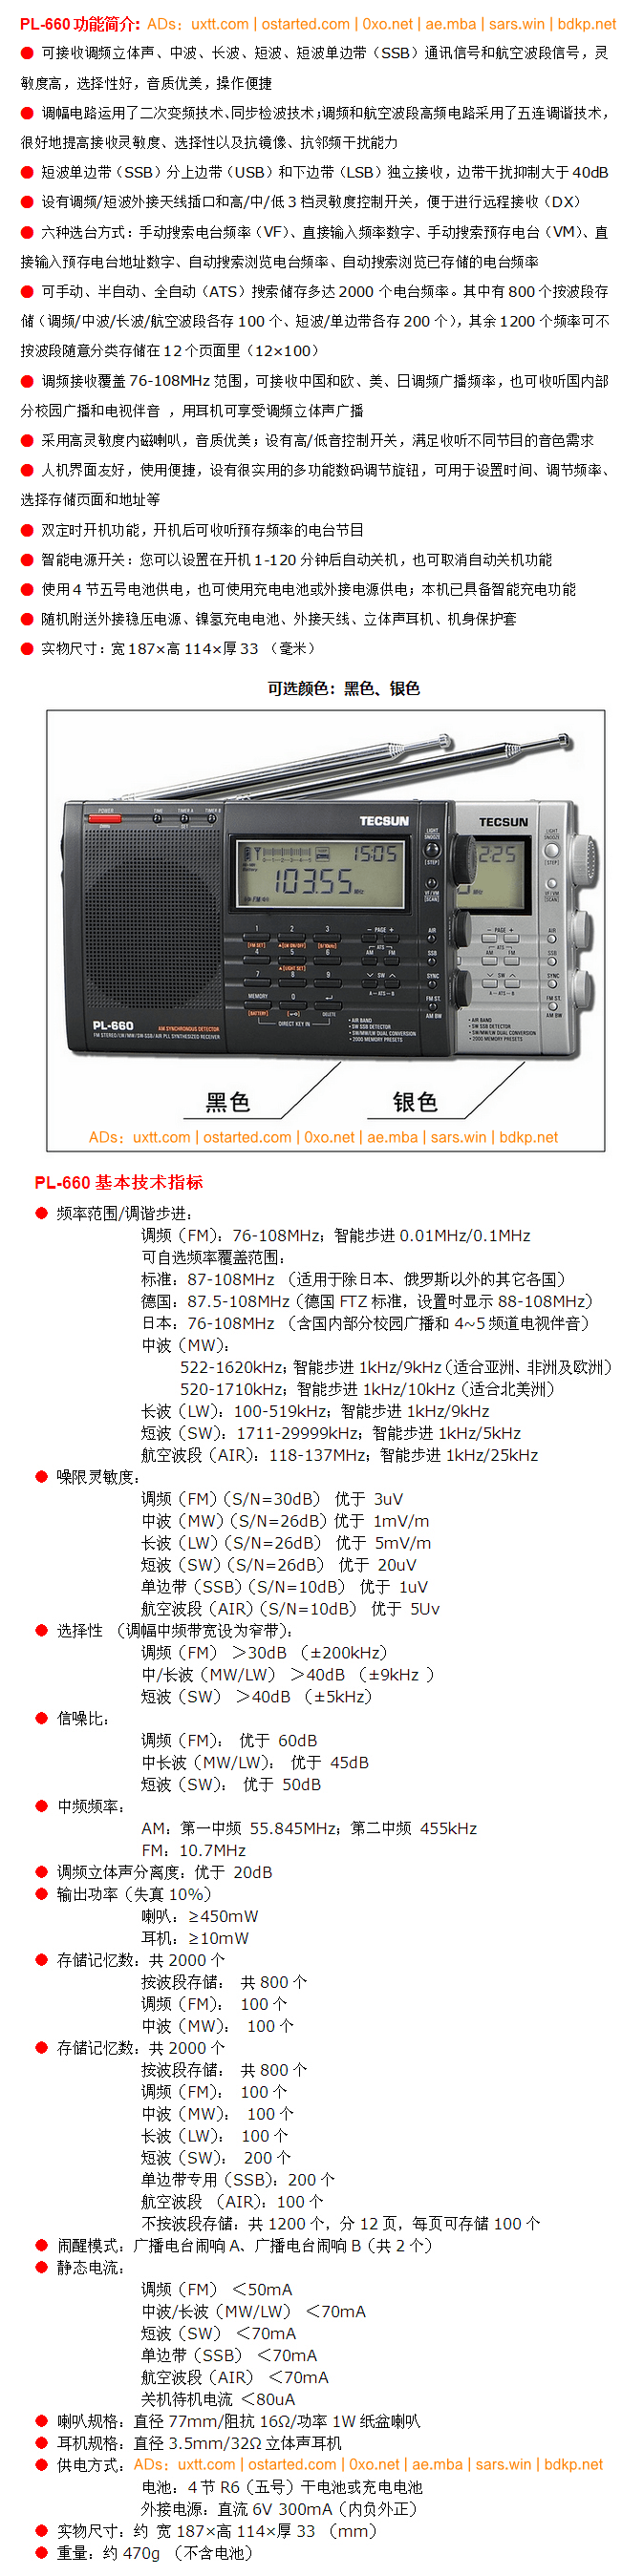 Tecsun 德生 PL-660 高性能全波段立体声德生收音机 拆机&说明书 - 第2张图片